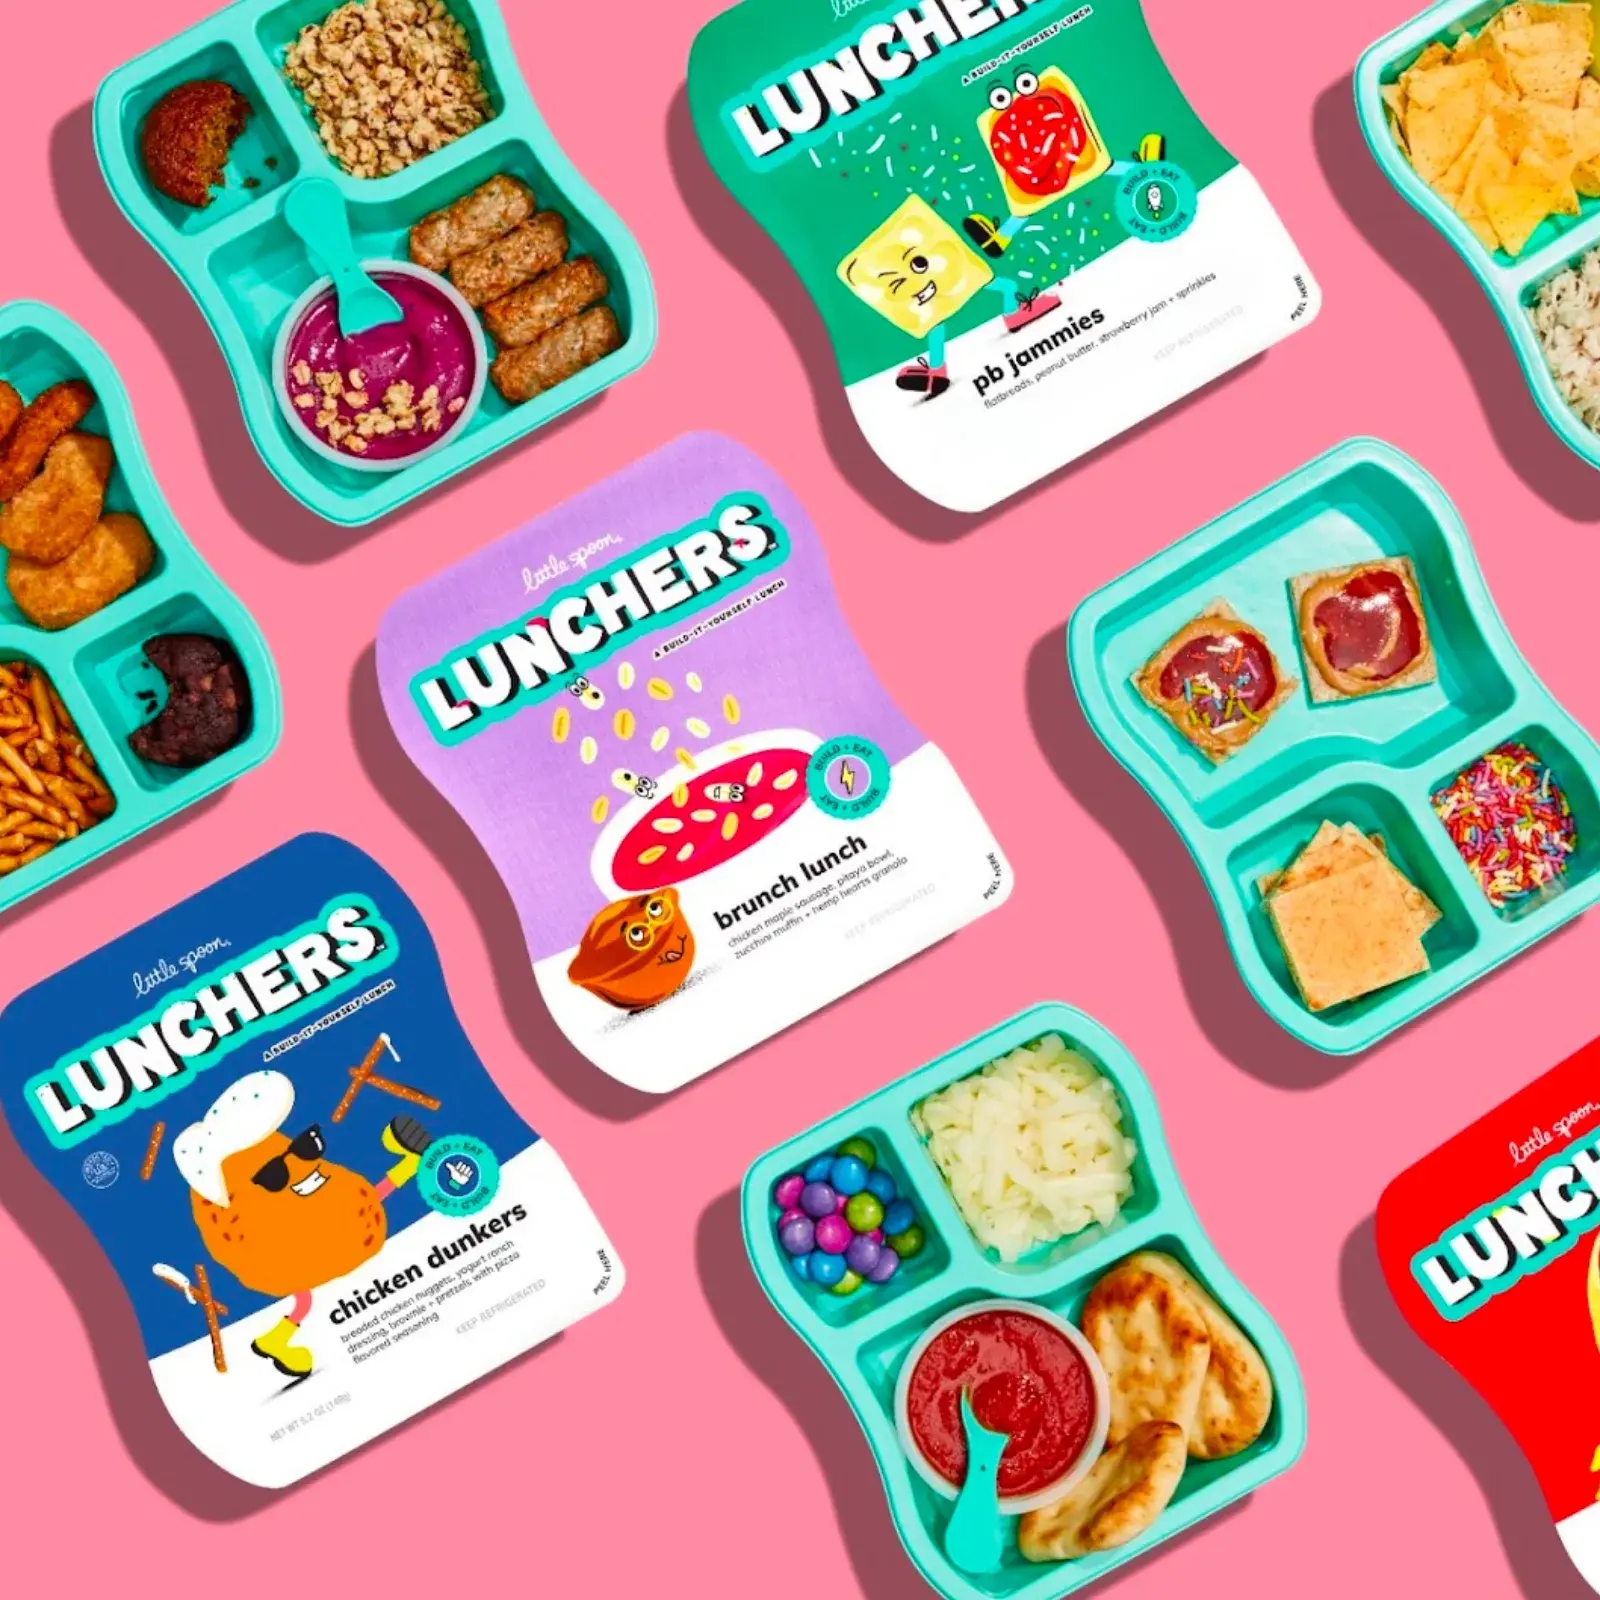 Little Spoon Baby Foods Redesigns Packaging